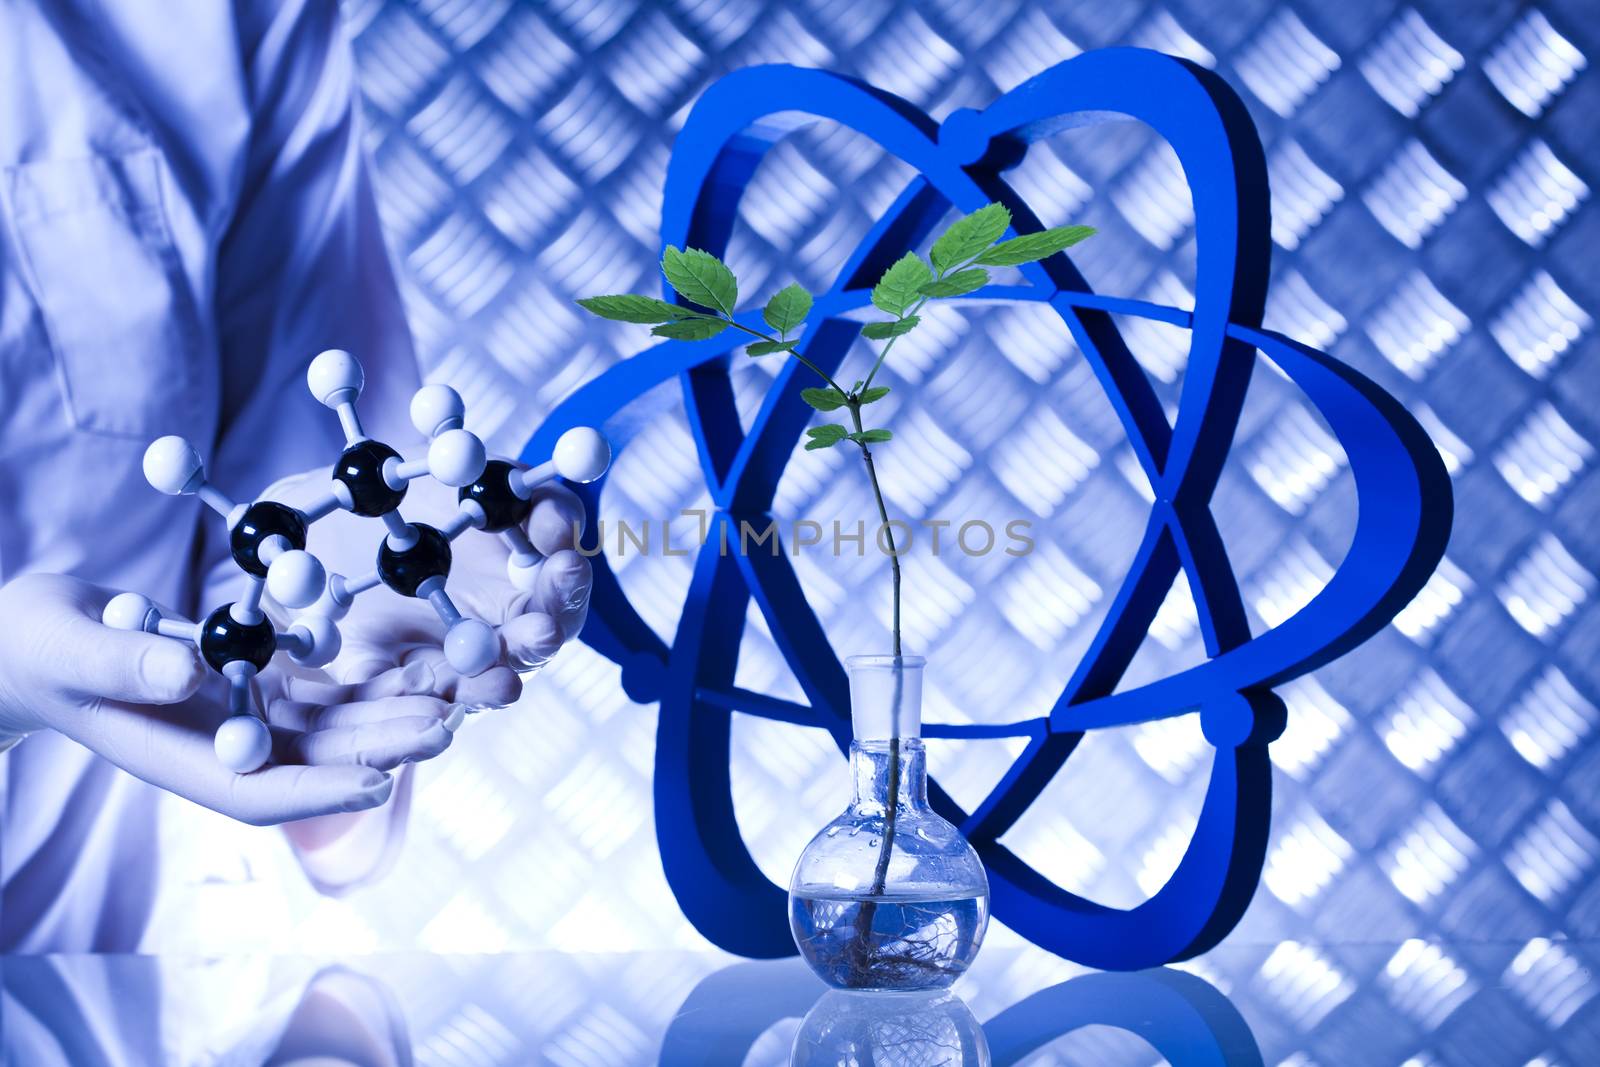 Laboratory, bio organic modern concept